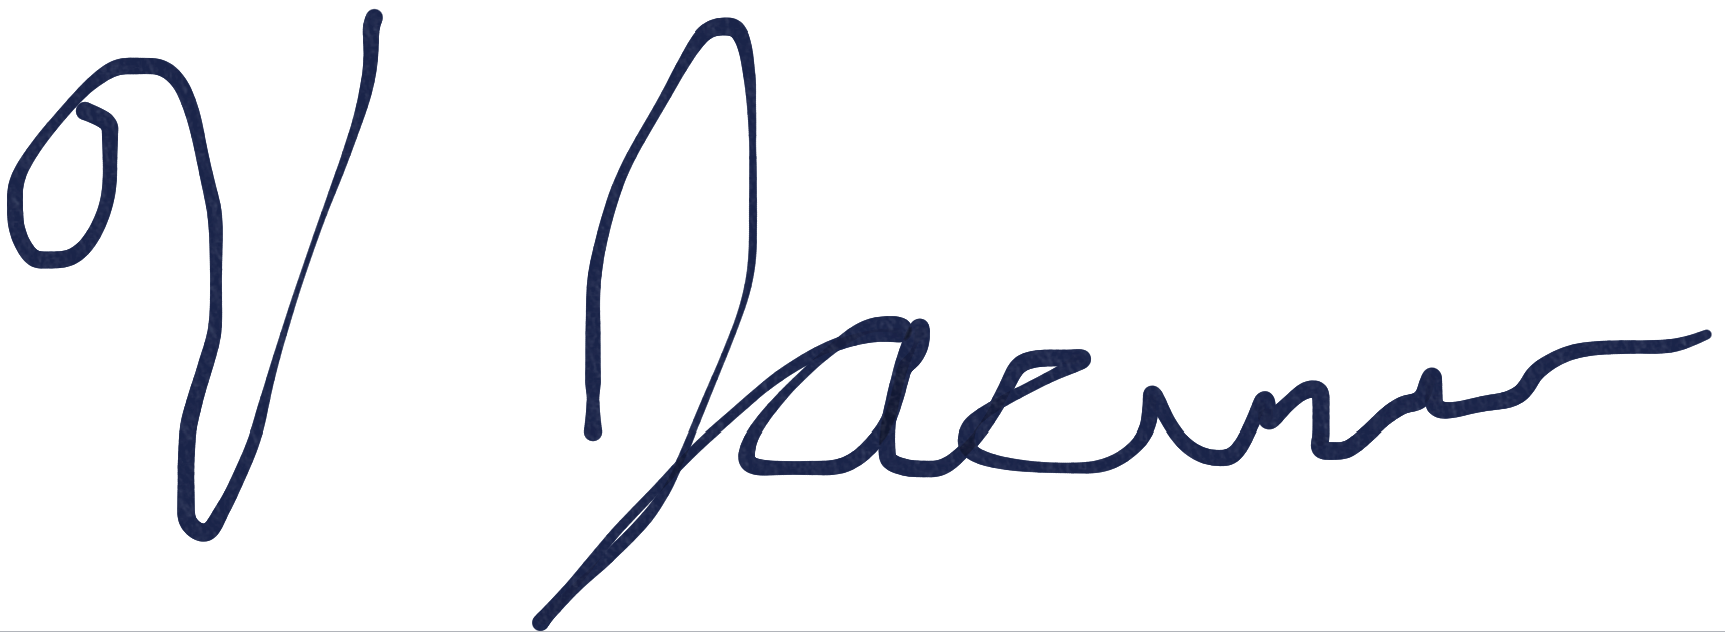 Signature: V Jacobs